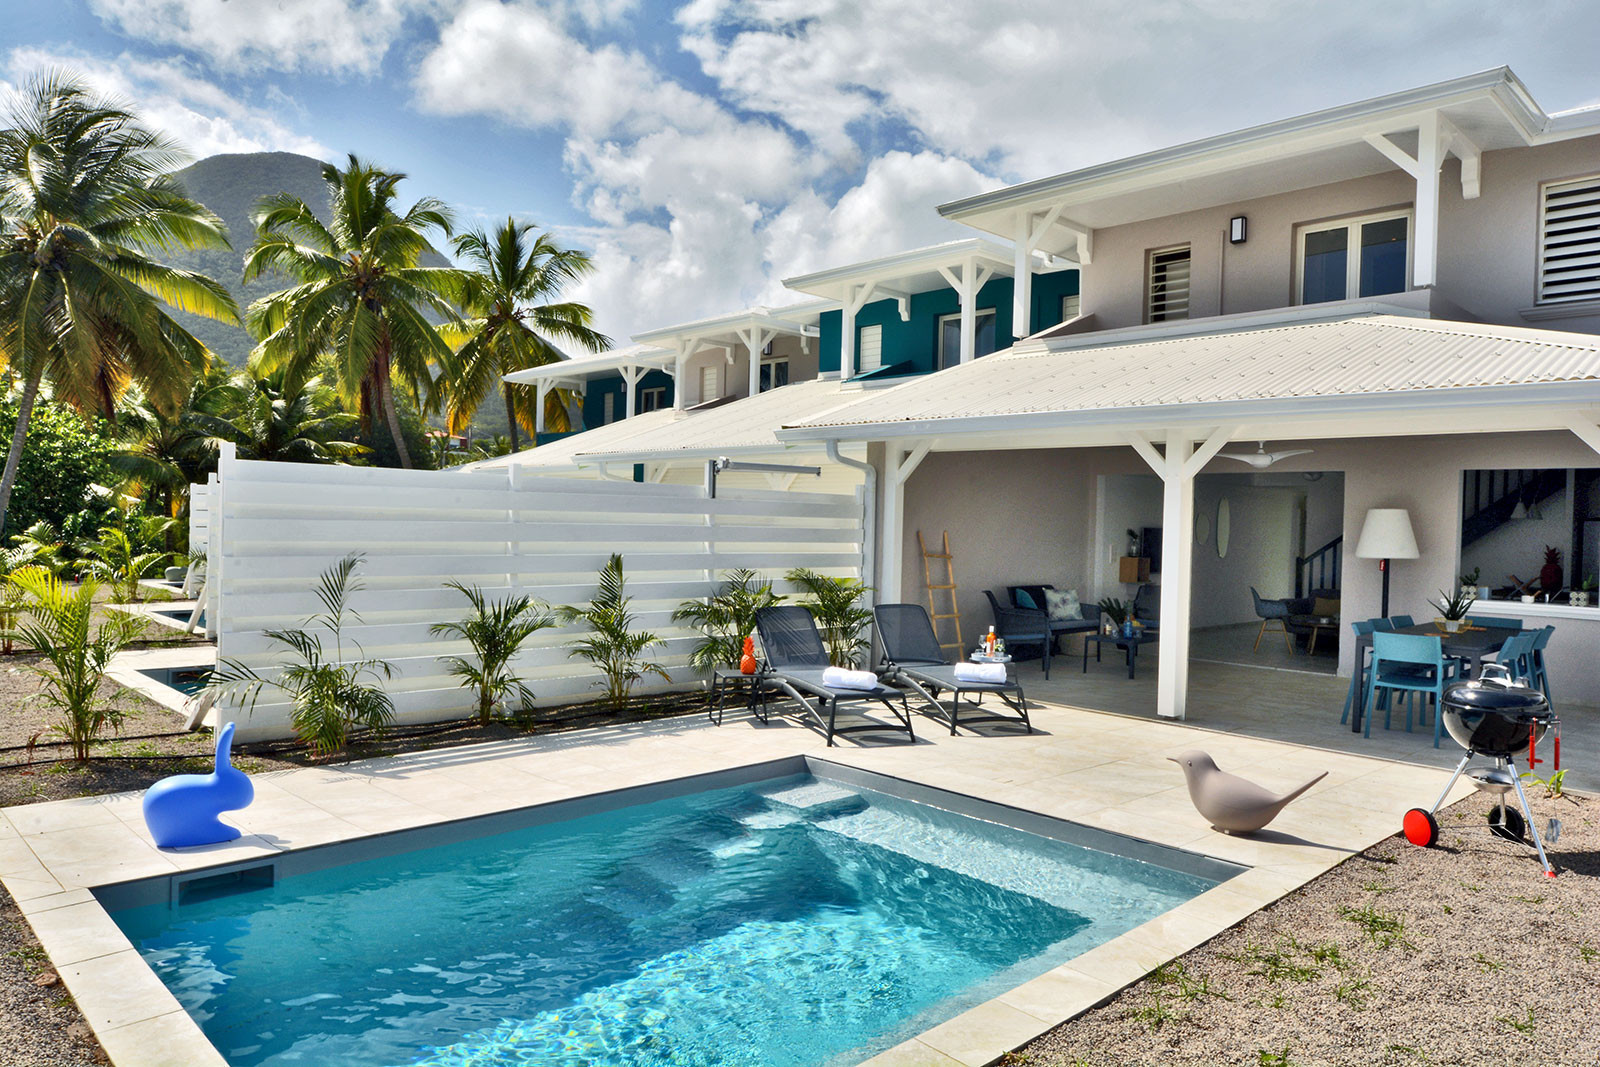 Rock & Diam's I villa de luxe location Martinique sur la plage piscine - Rock and Diam's I piscine